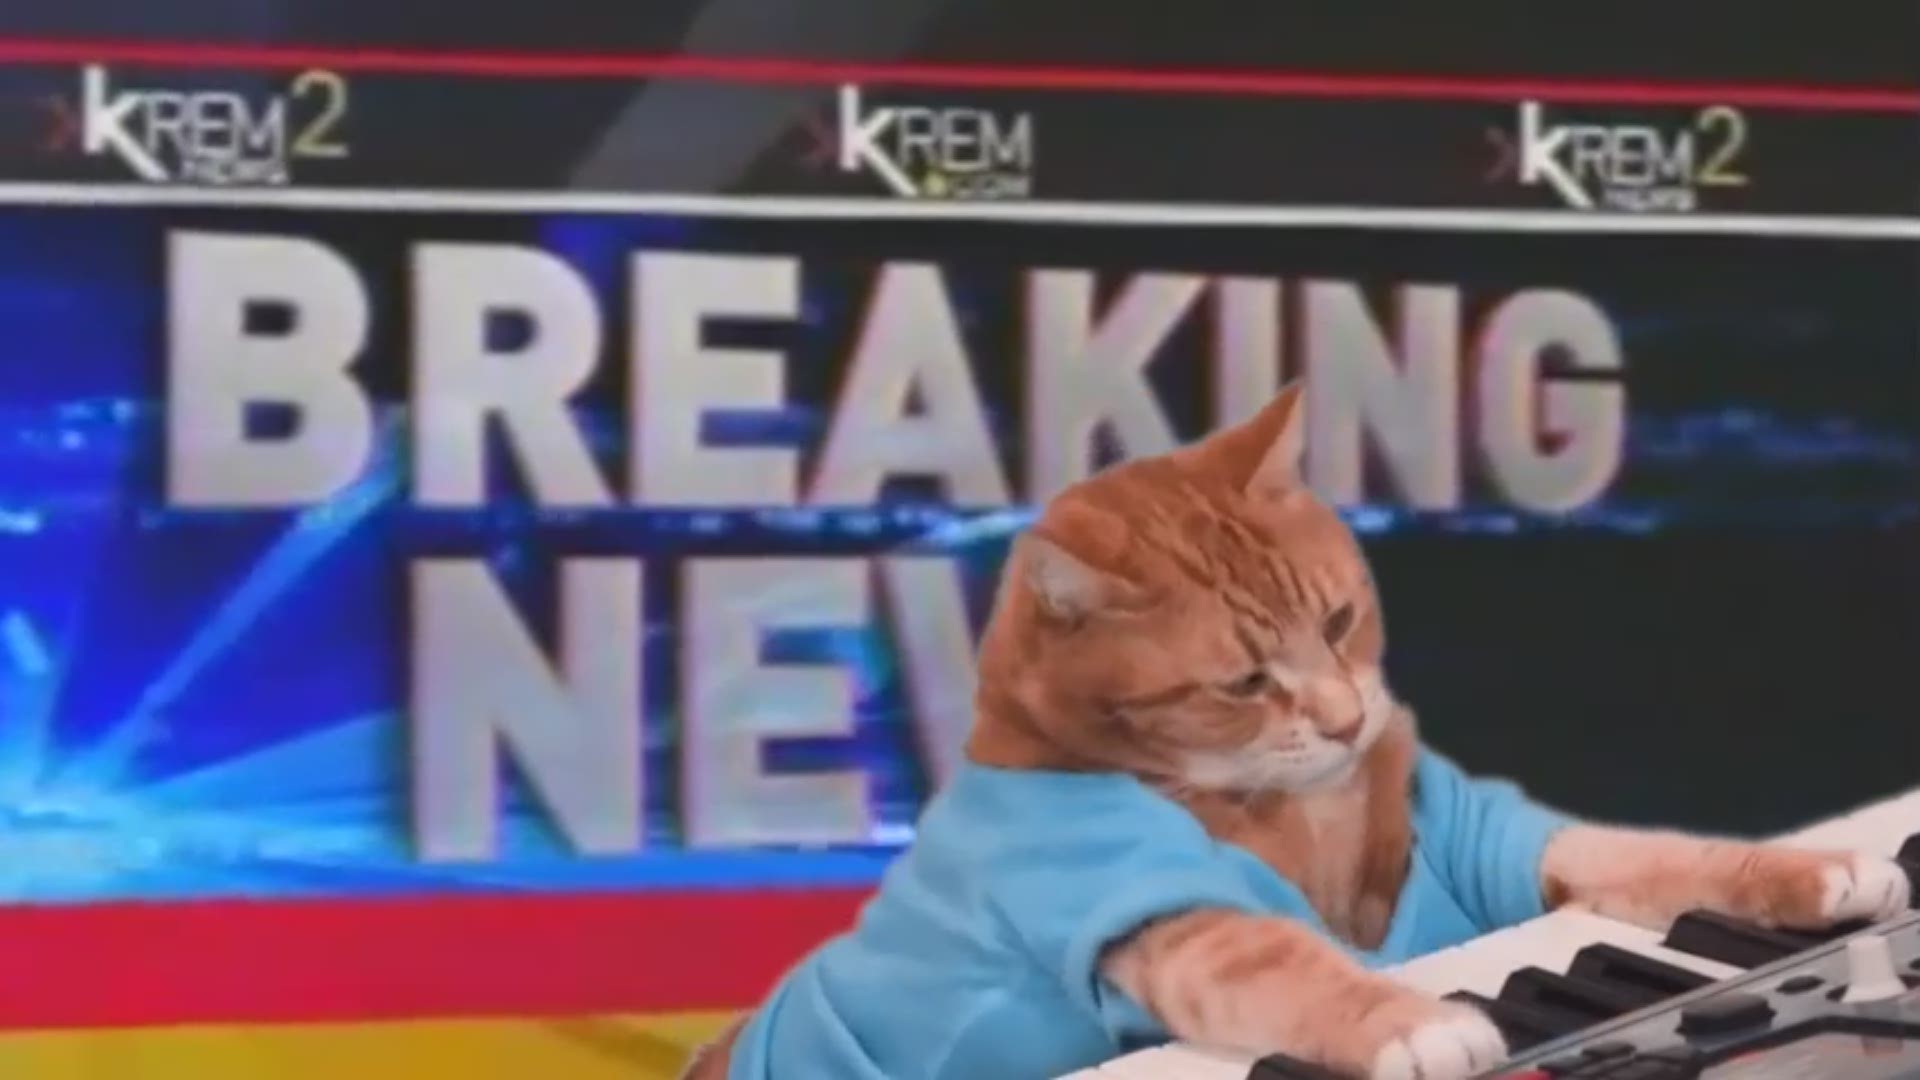 Keyboard cat makes his world premiere at Spokane Street Music Week.